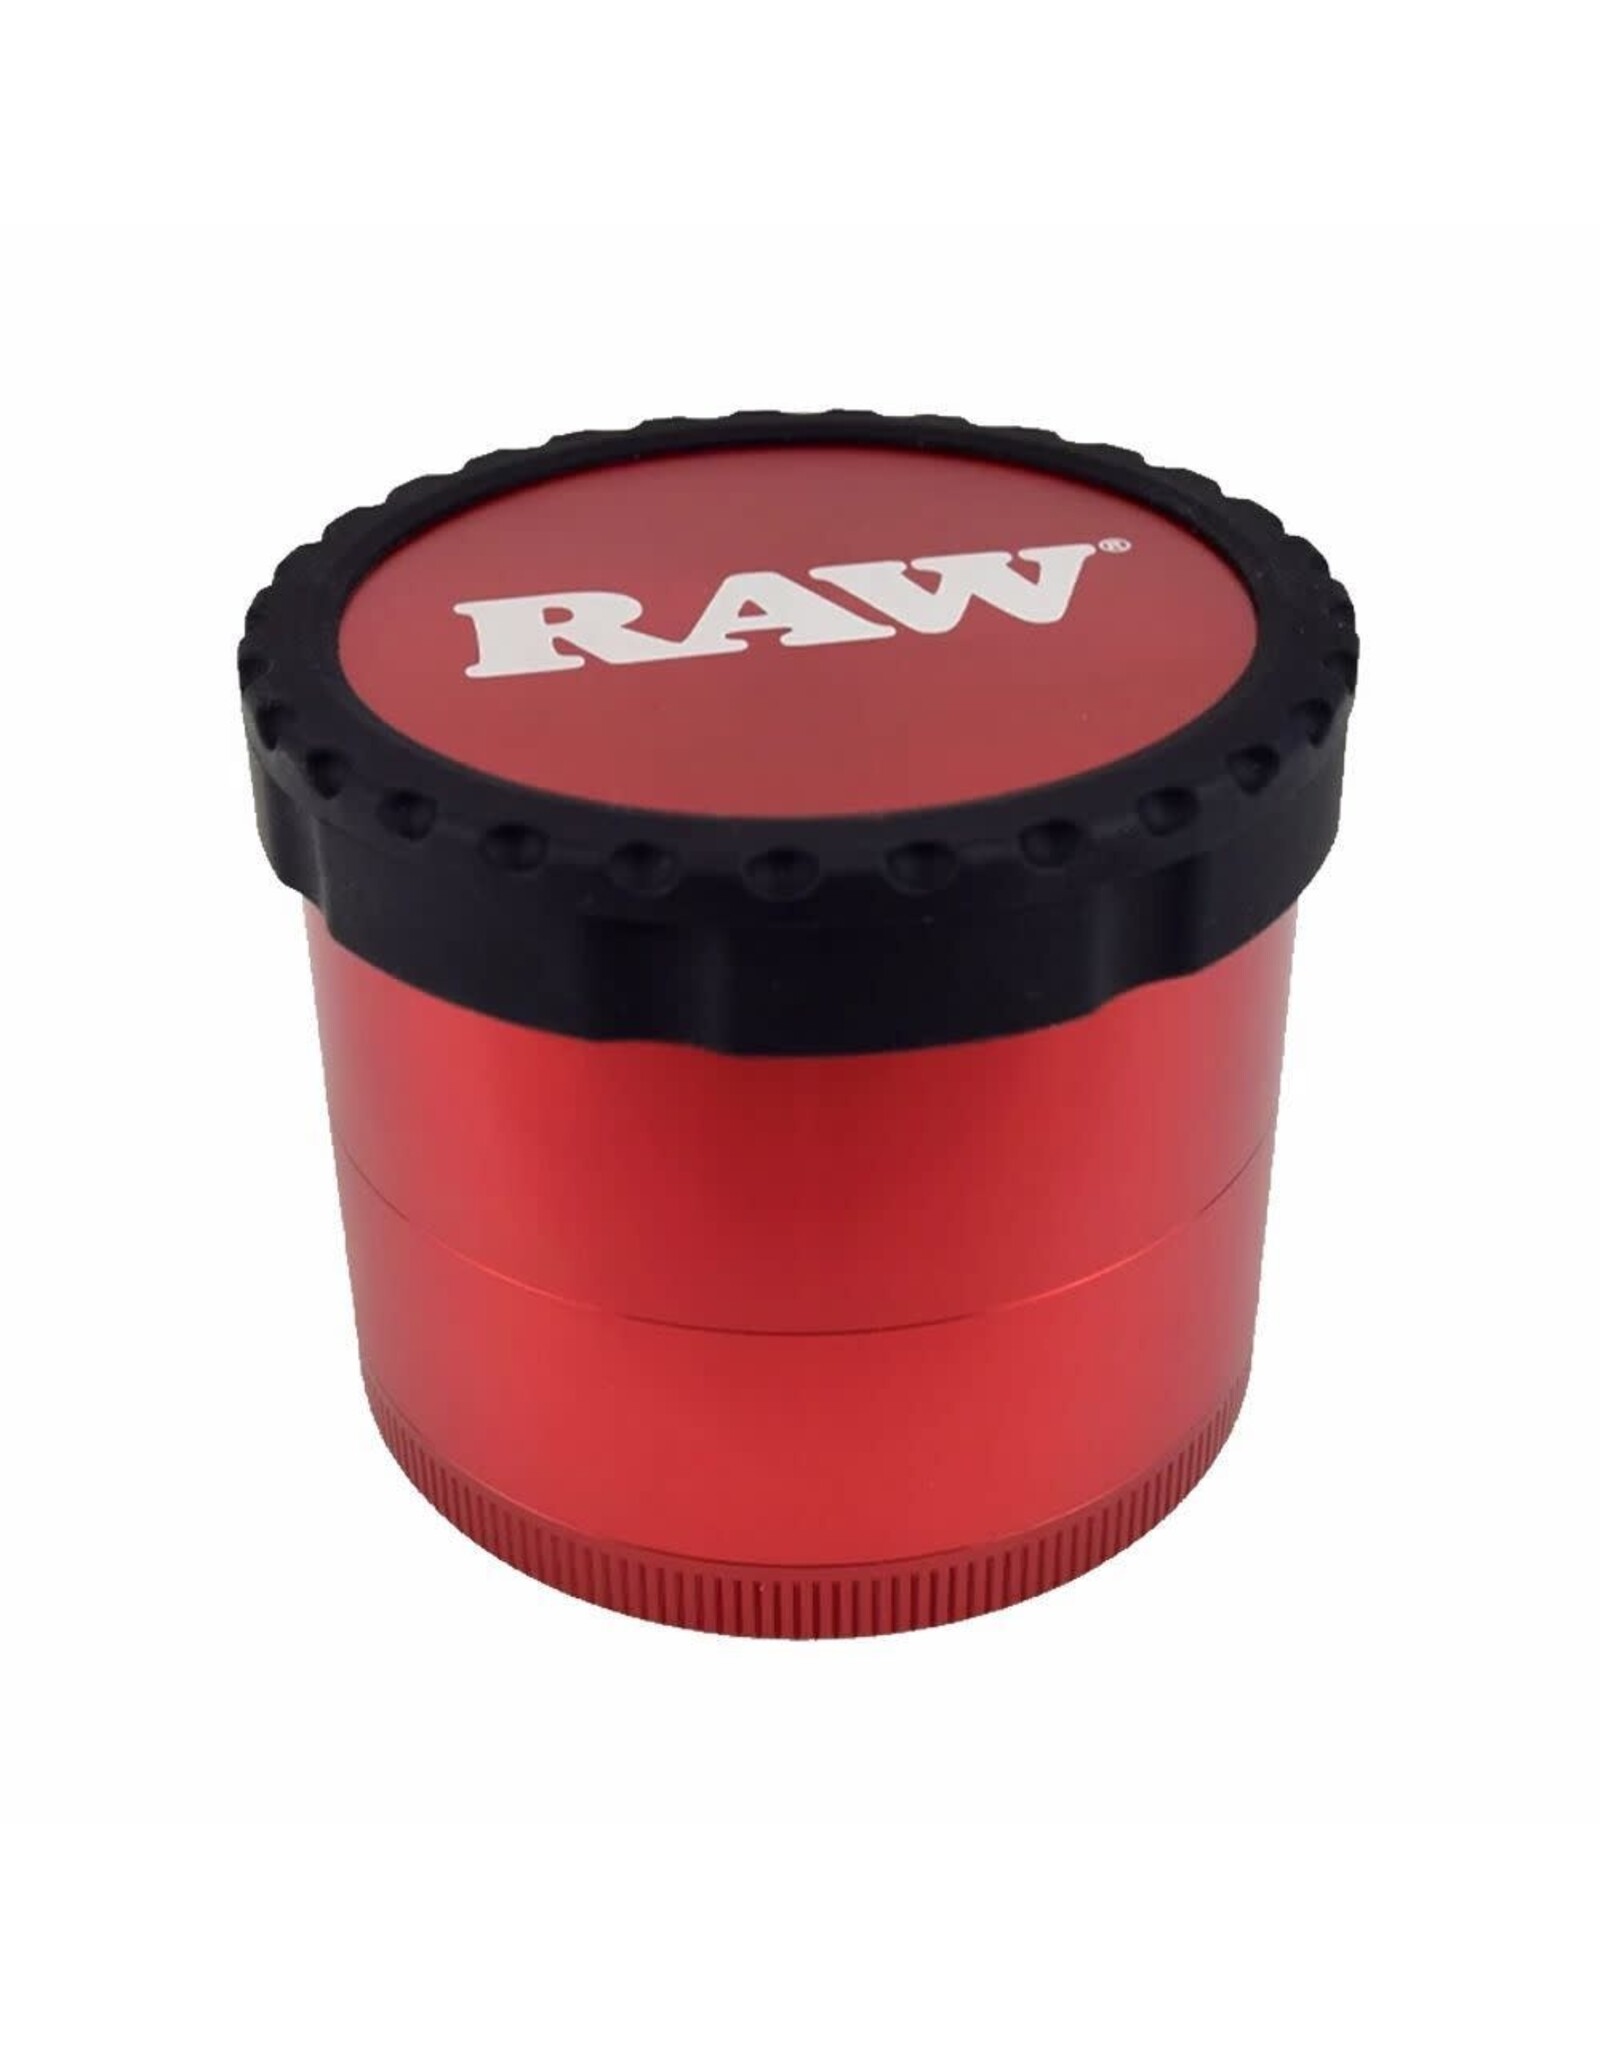 Raw Raw Life Grinder 4 Piece Red V3